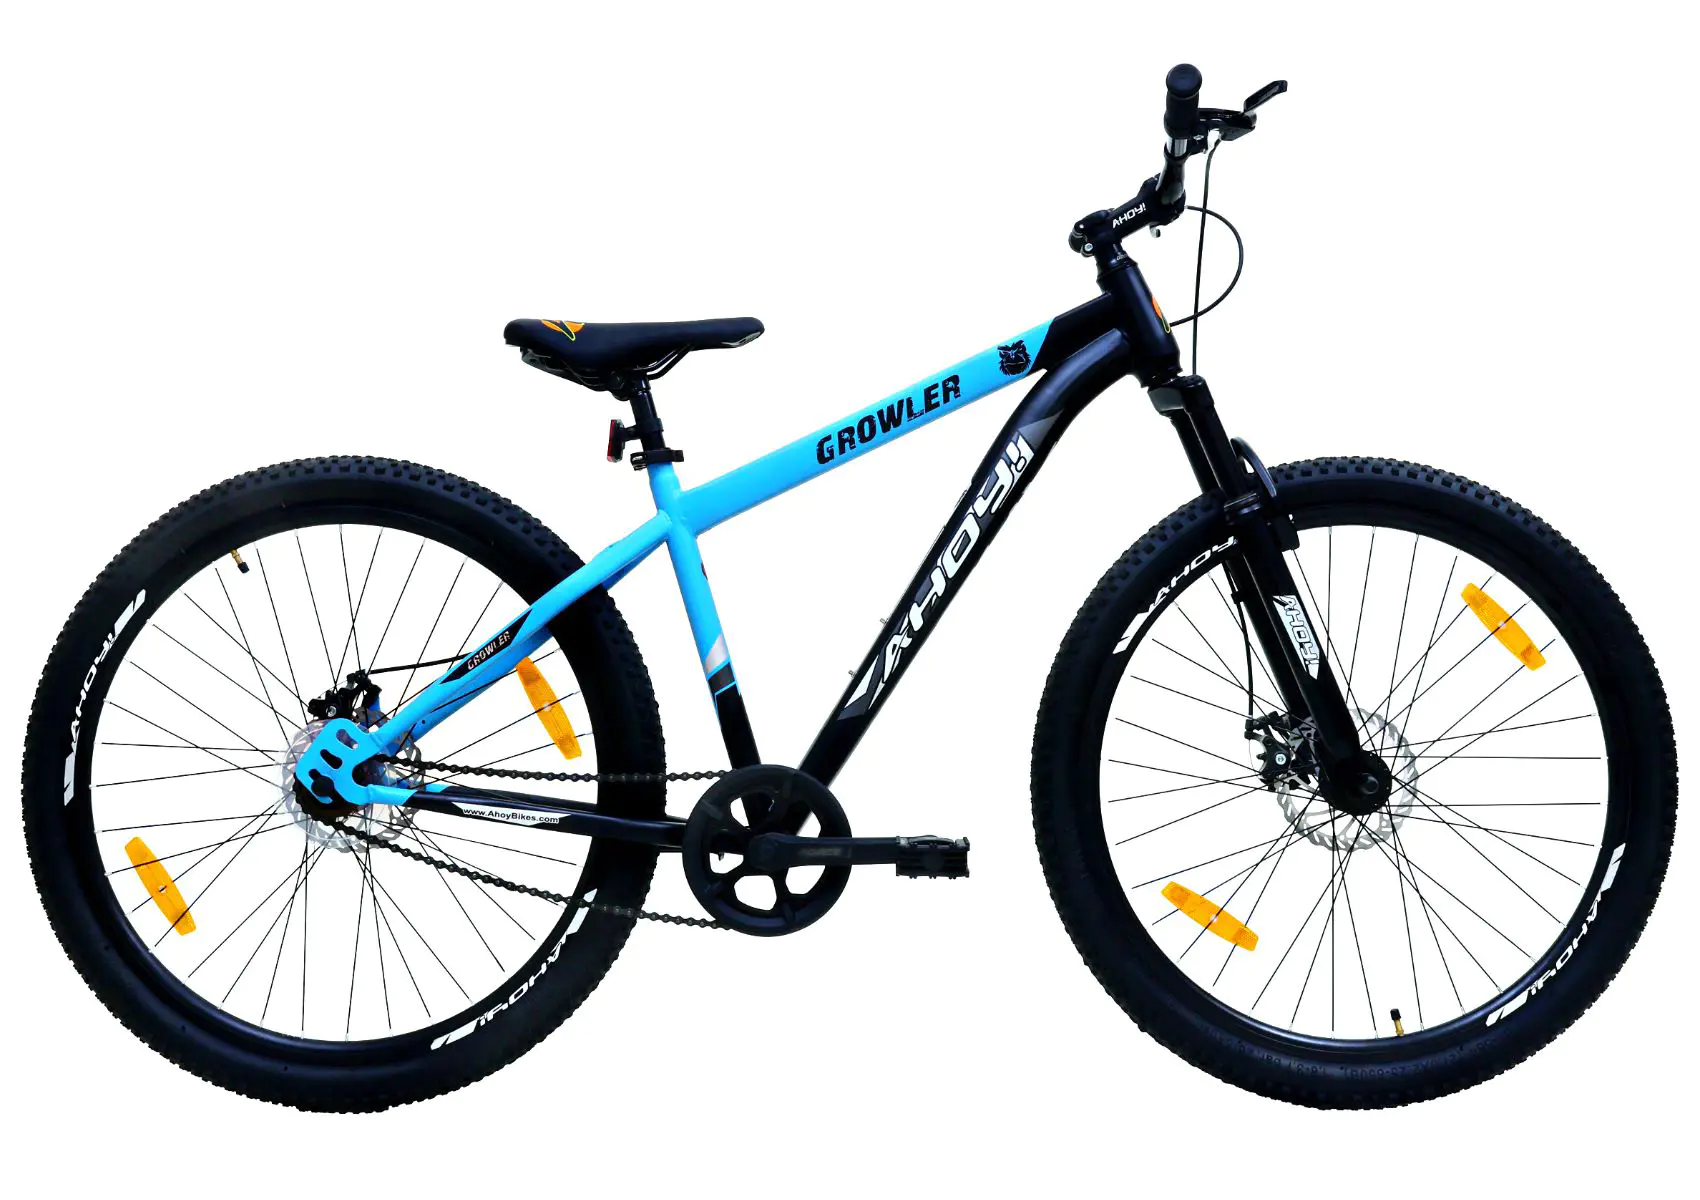 Growler Single Speed Bike 26T | Buy Blue Non Gear Cycle for Men